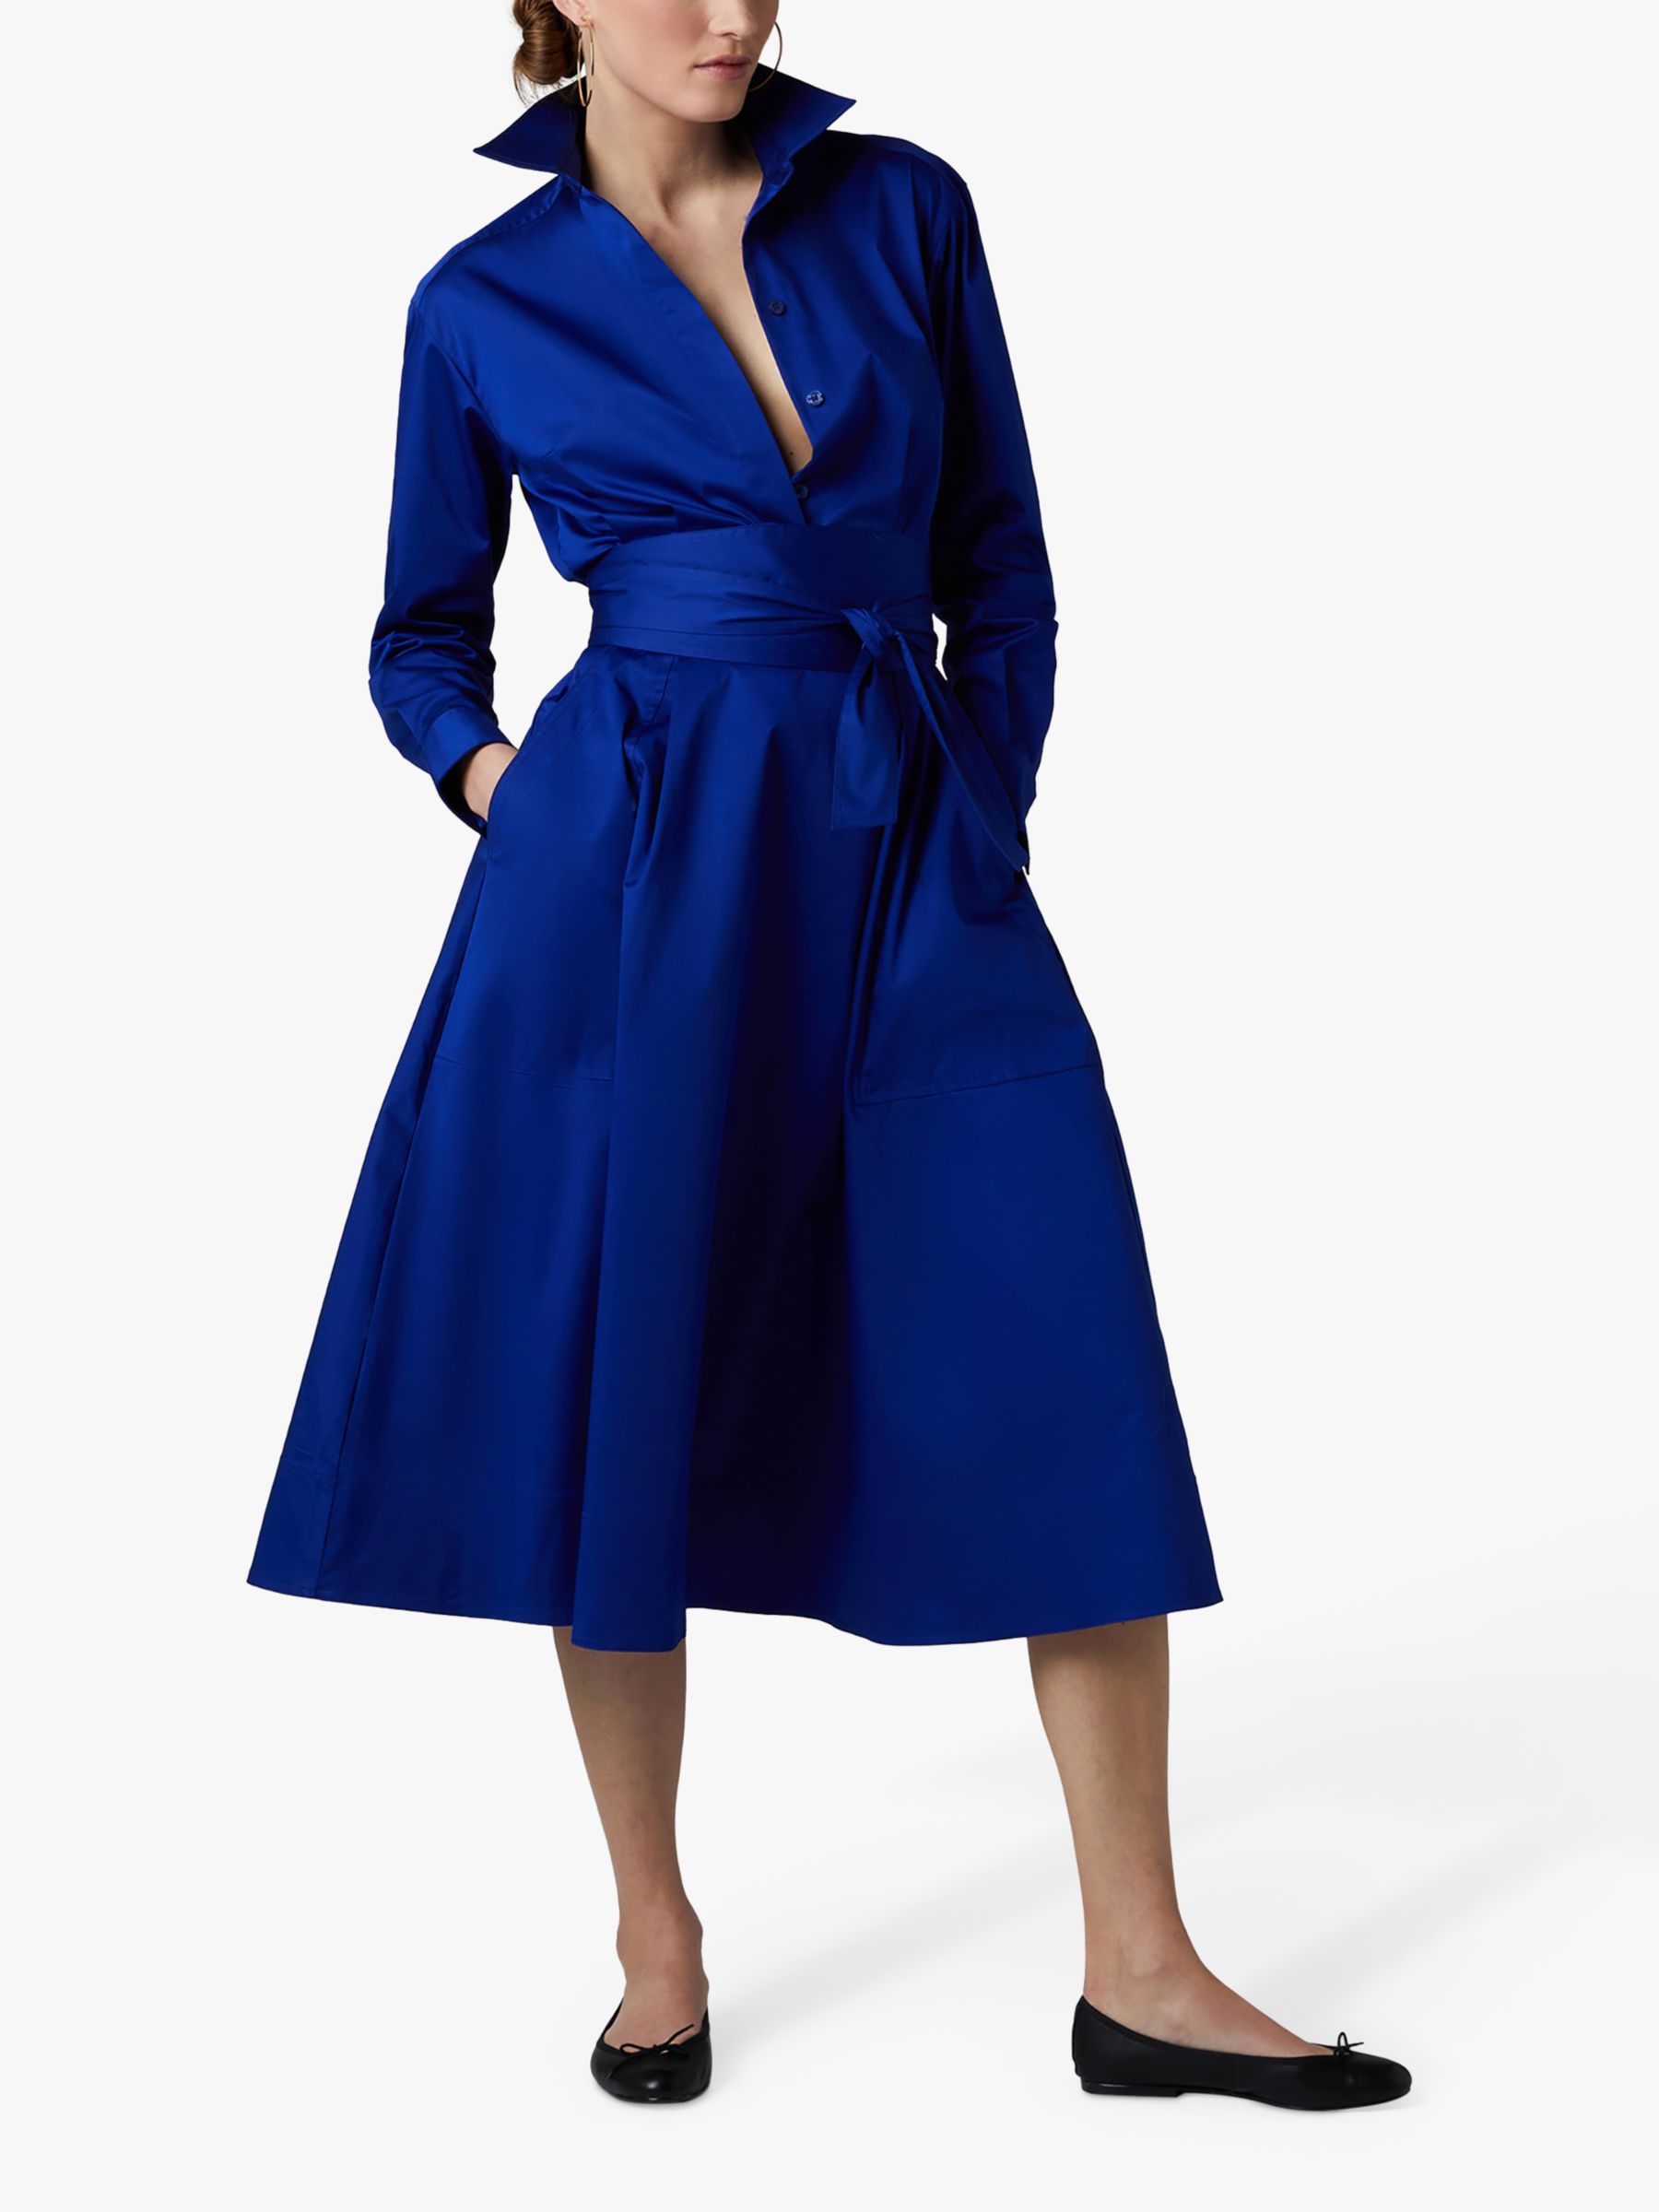 Jasper Conran London Blythe Full Skirt Midi Shirt Dress, Royal Blue, 8